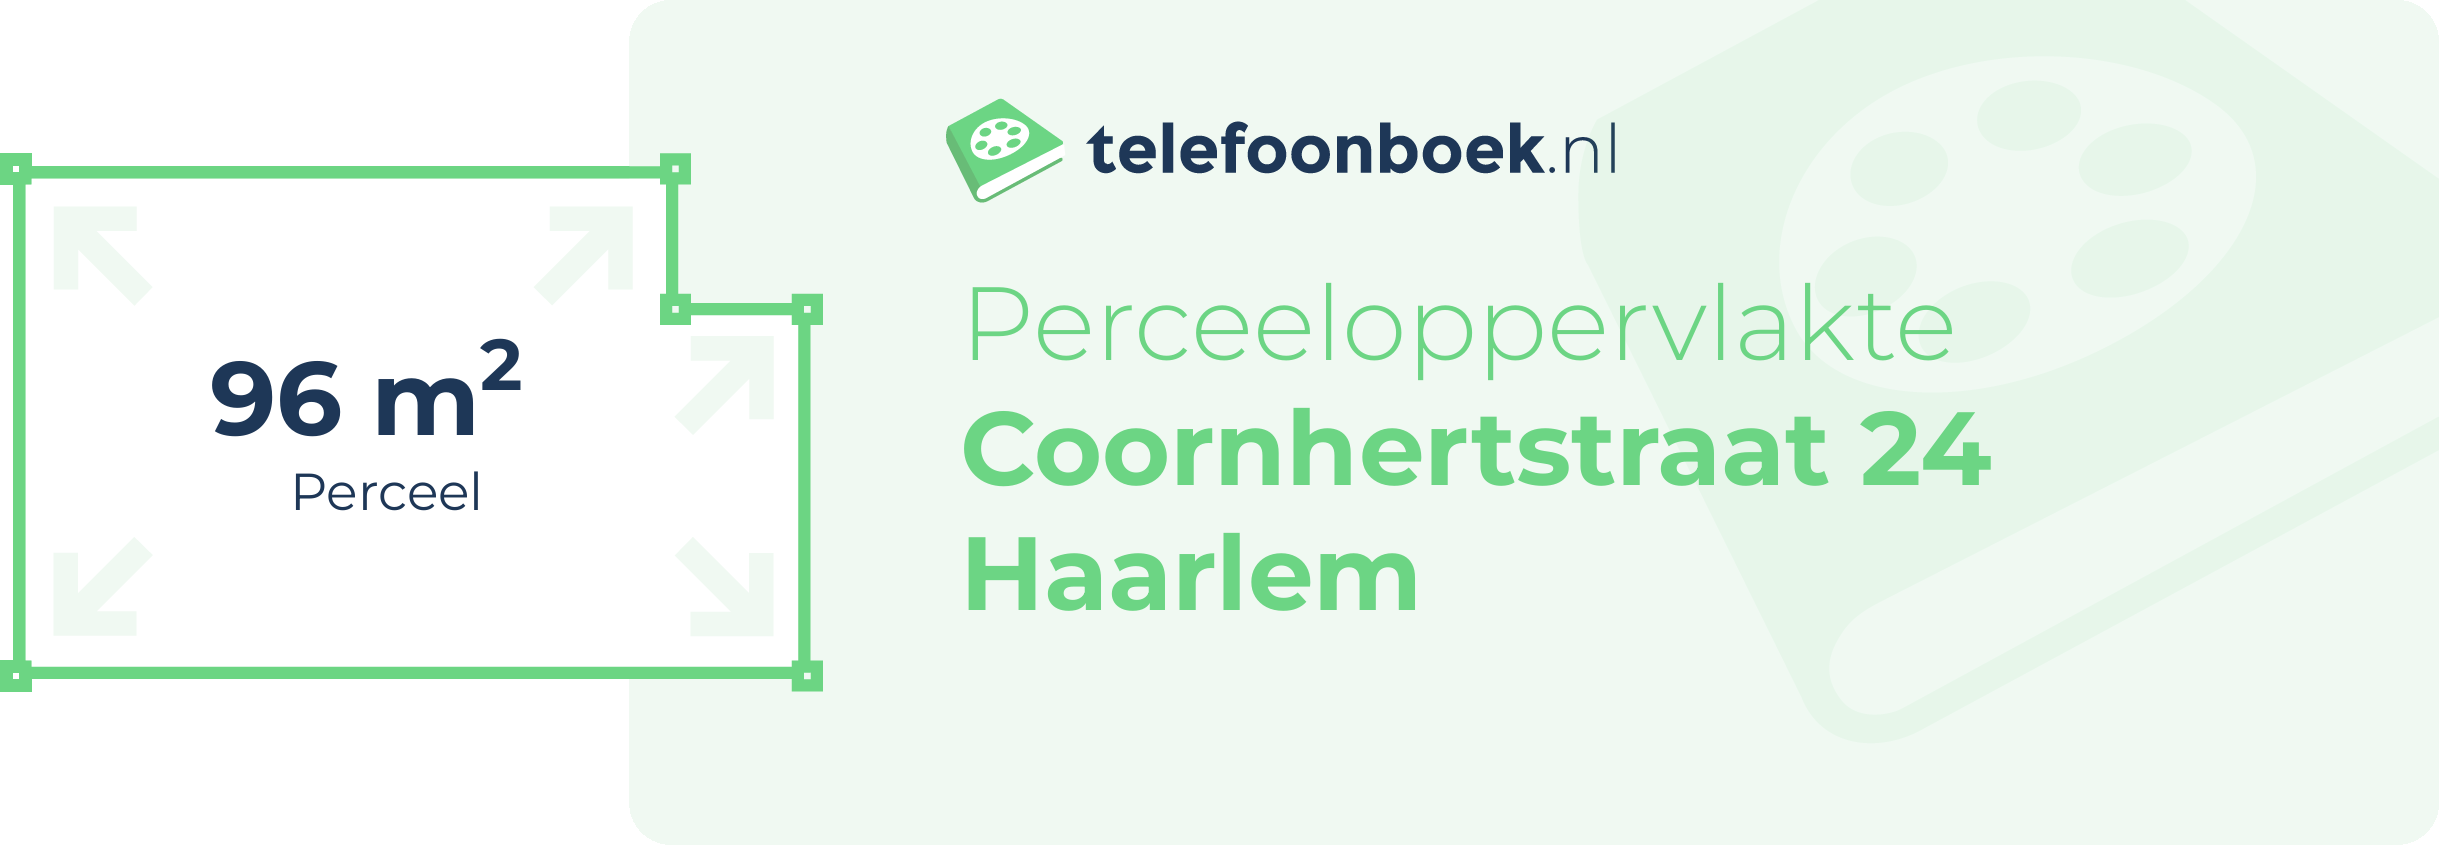 Perceeloppervlakte Coornhertstraat 24 Haarlem